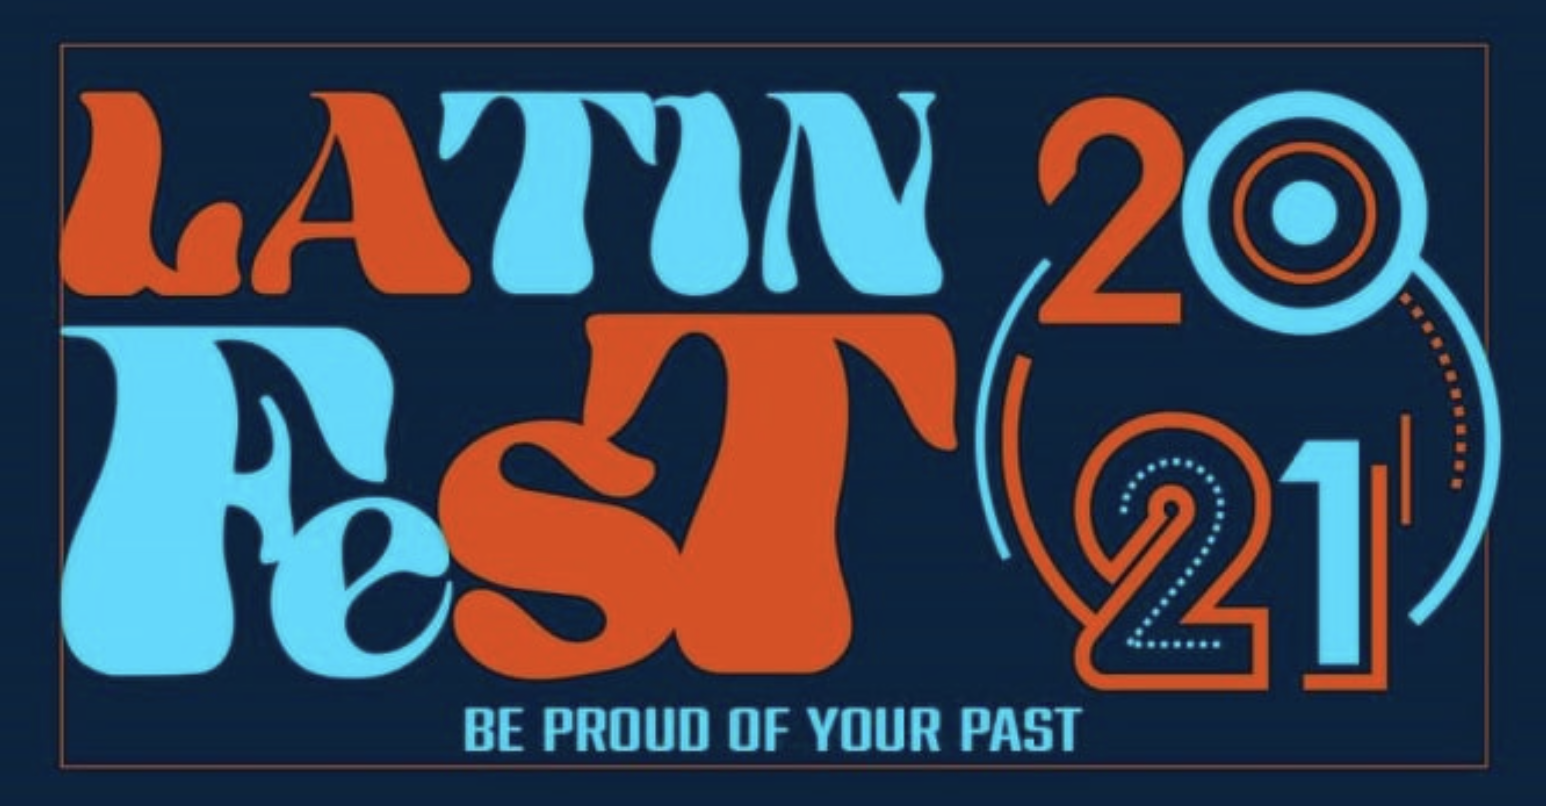 Cazateatro to Hold Its Third Latin Fest in September Cazateatro